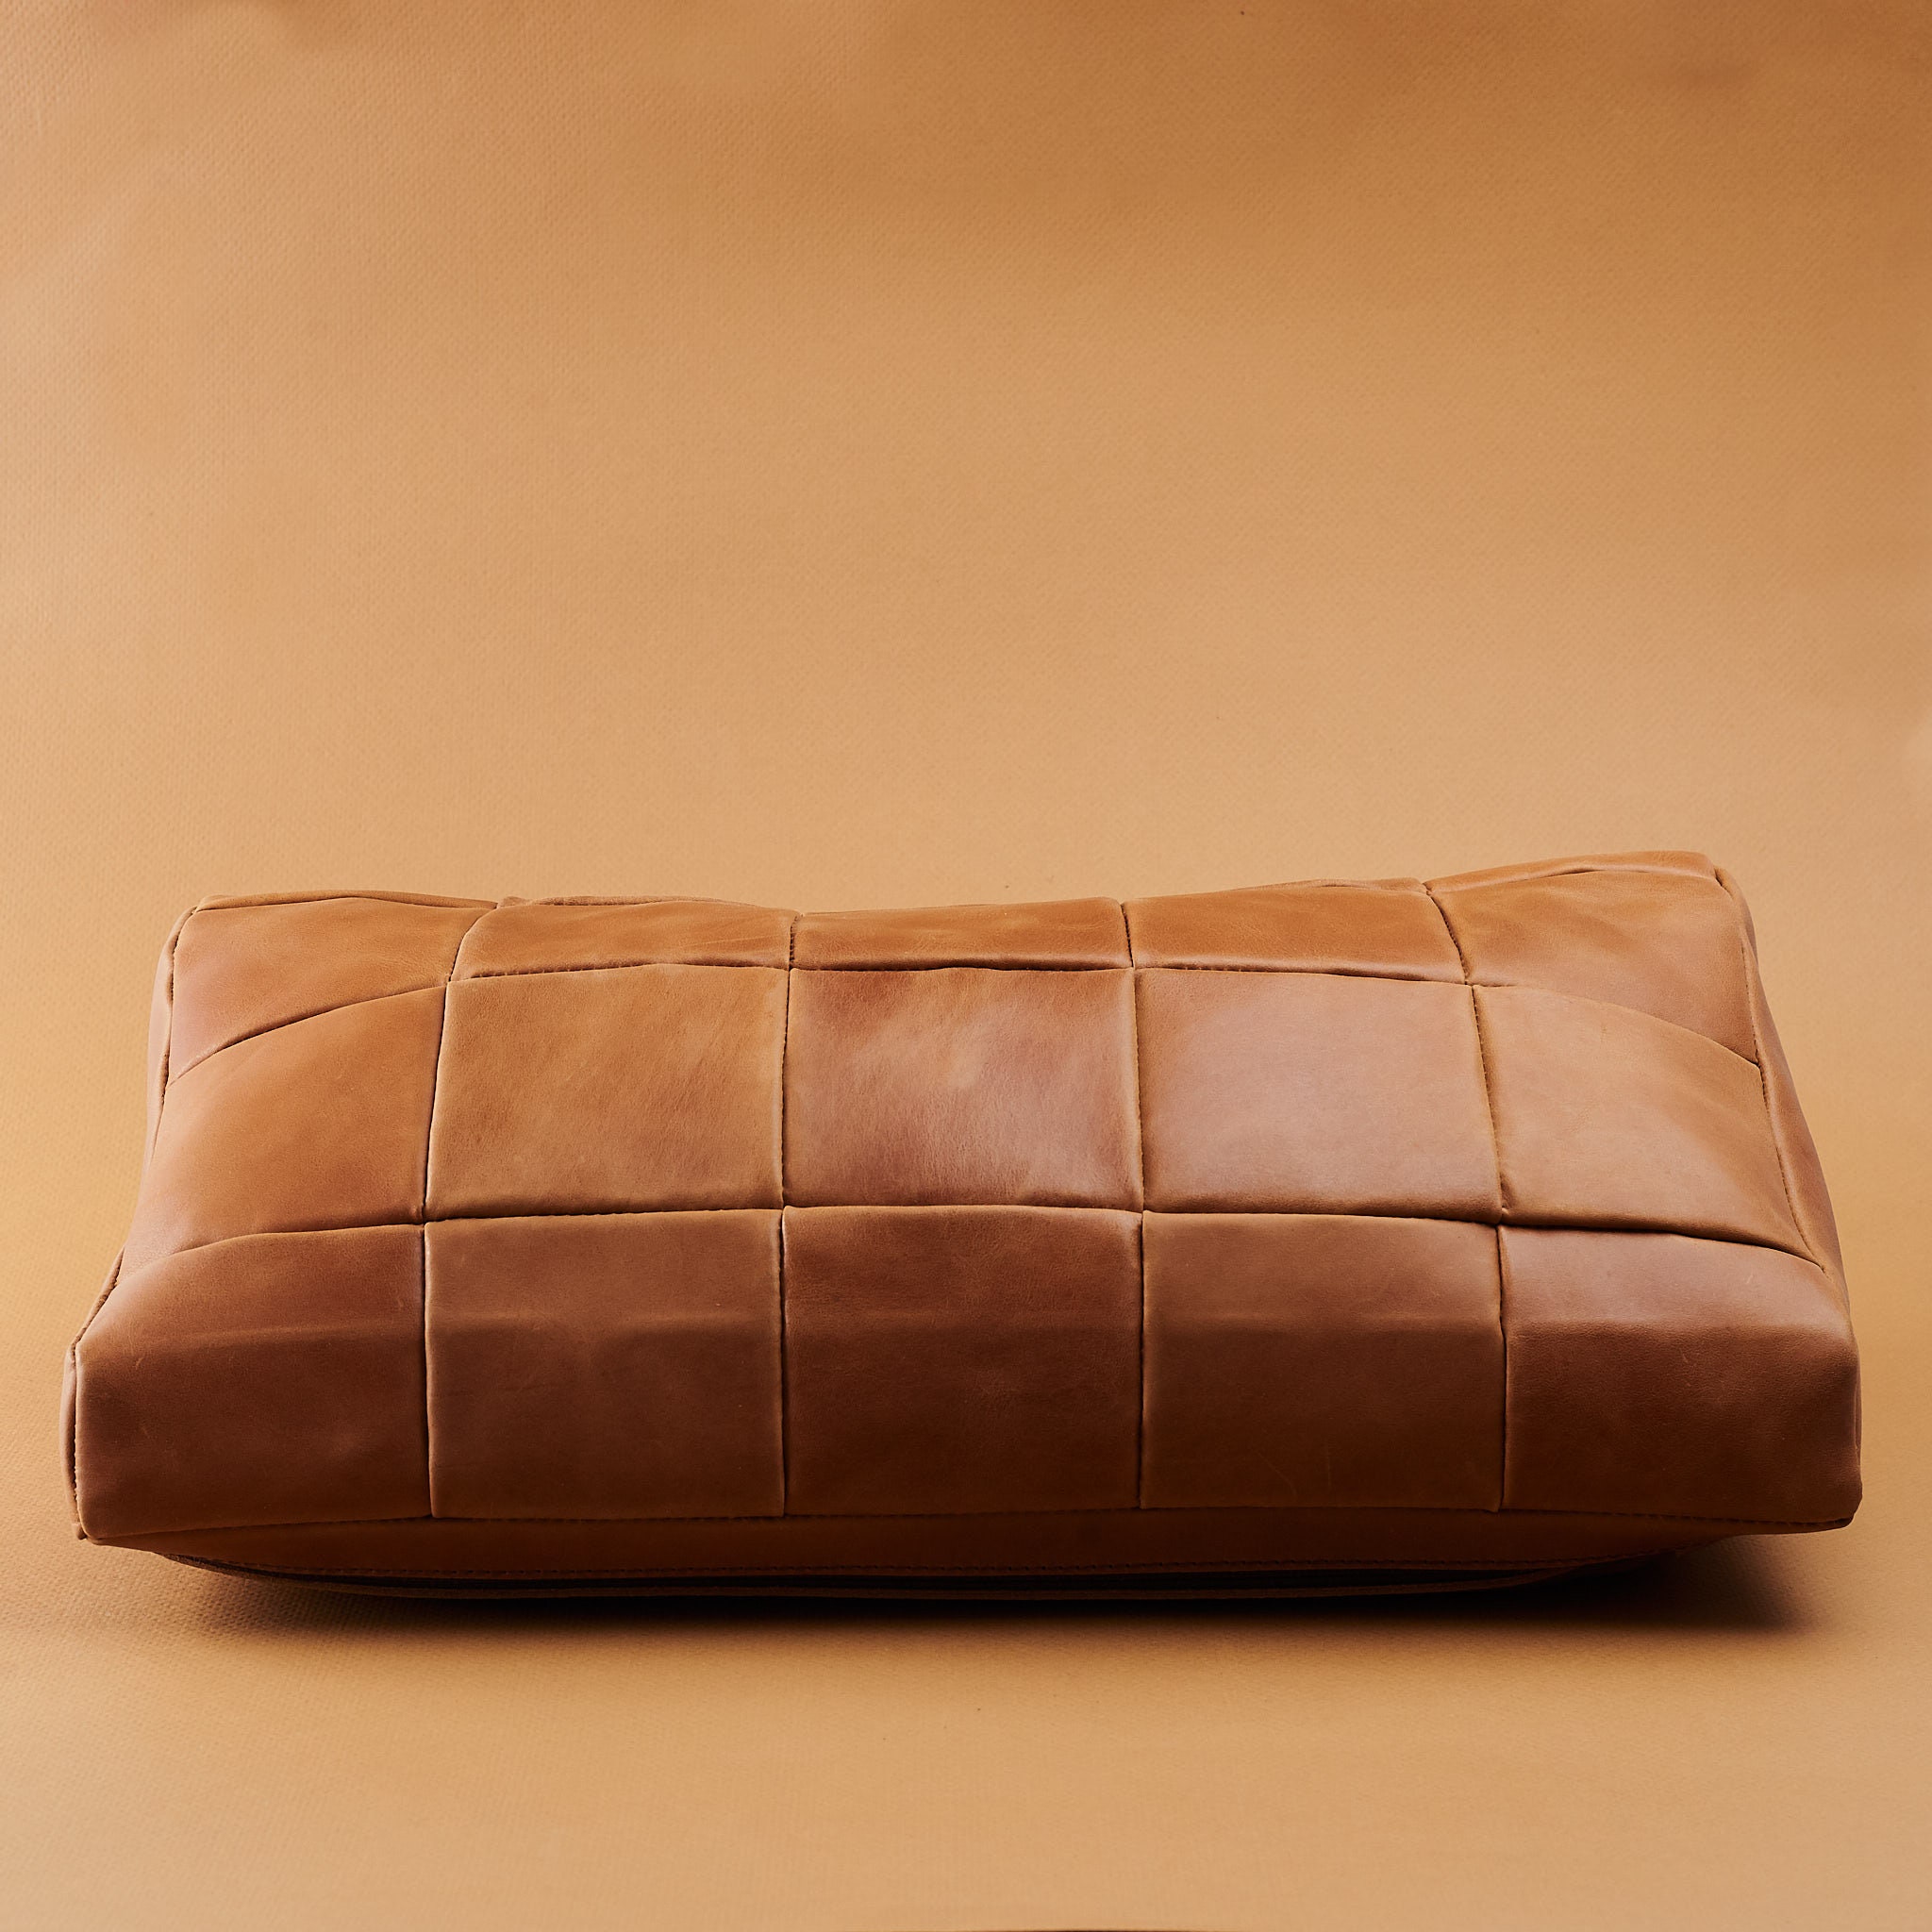 Leather Footrest Cover Brown, Ergonomic, Foot Rest Desk, Home